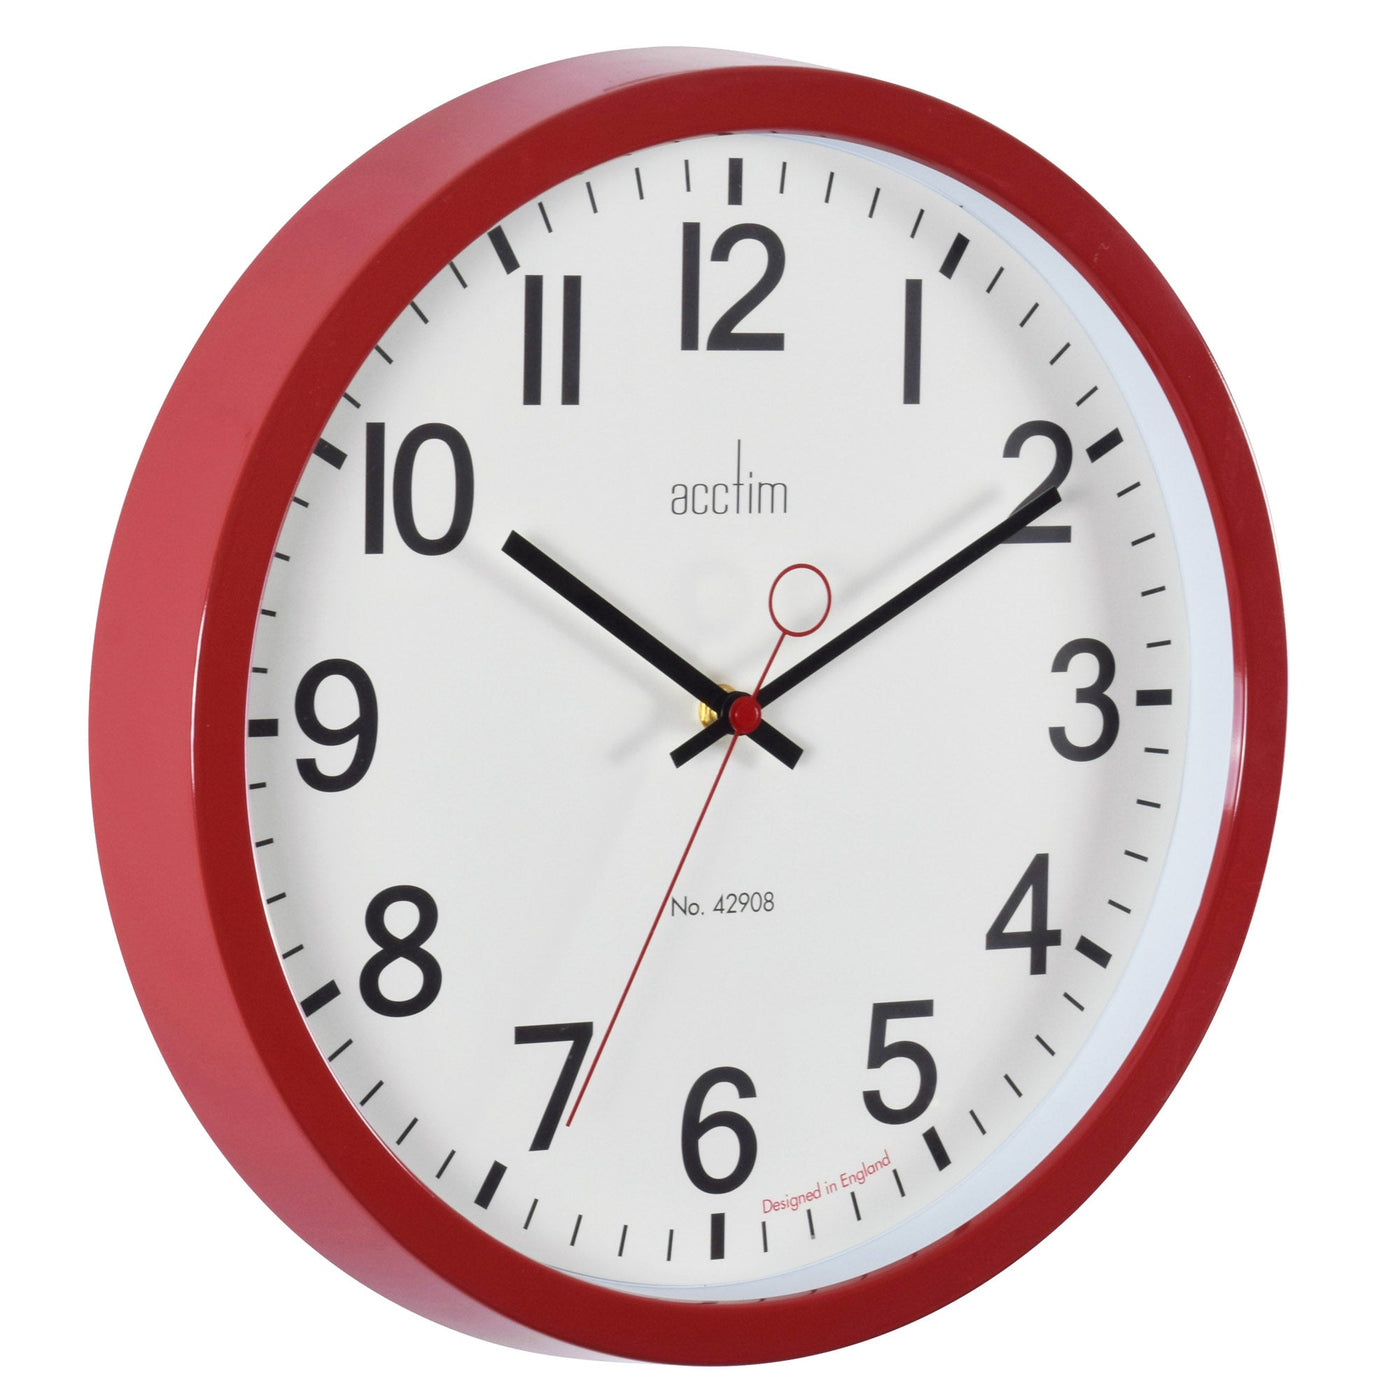 Acctim Kempston Station Wall Clock Red - timeframedclocks